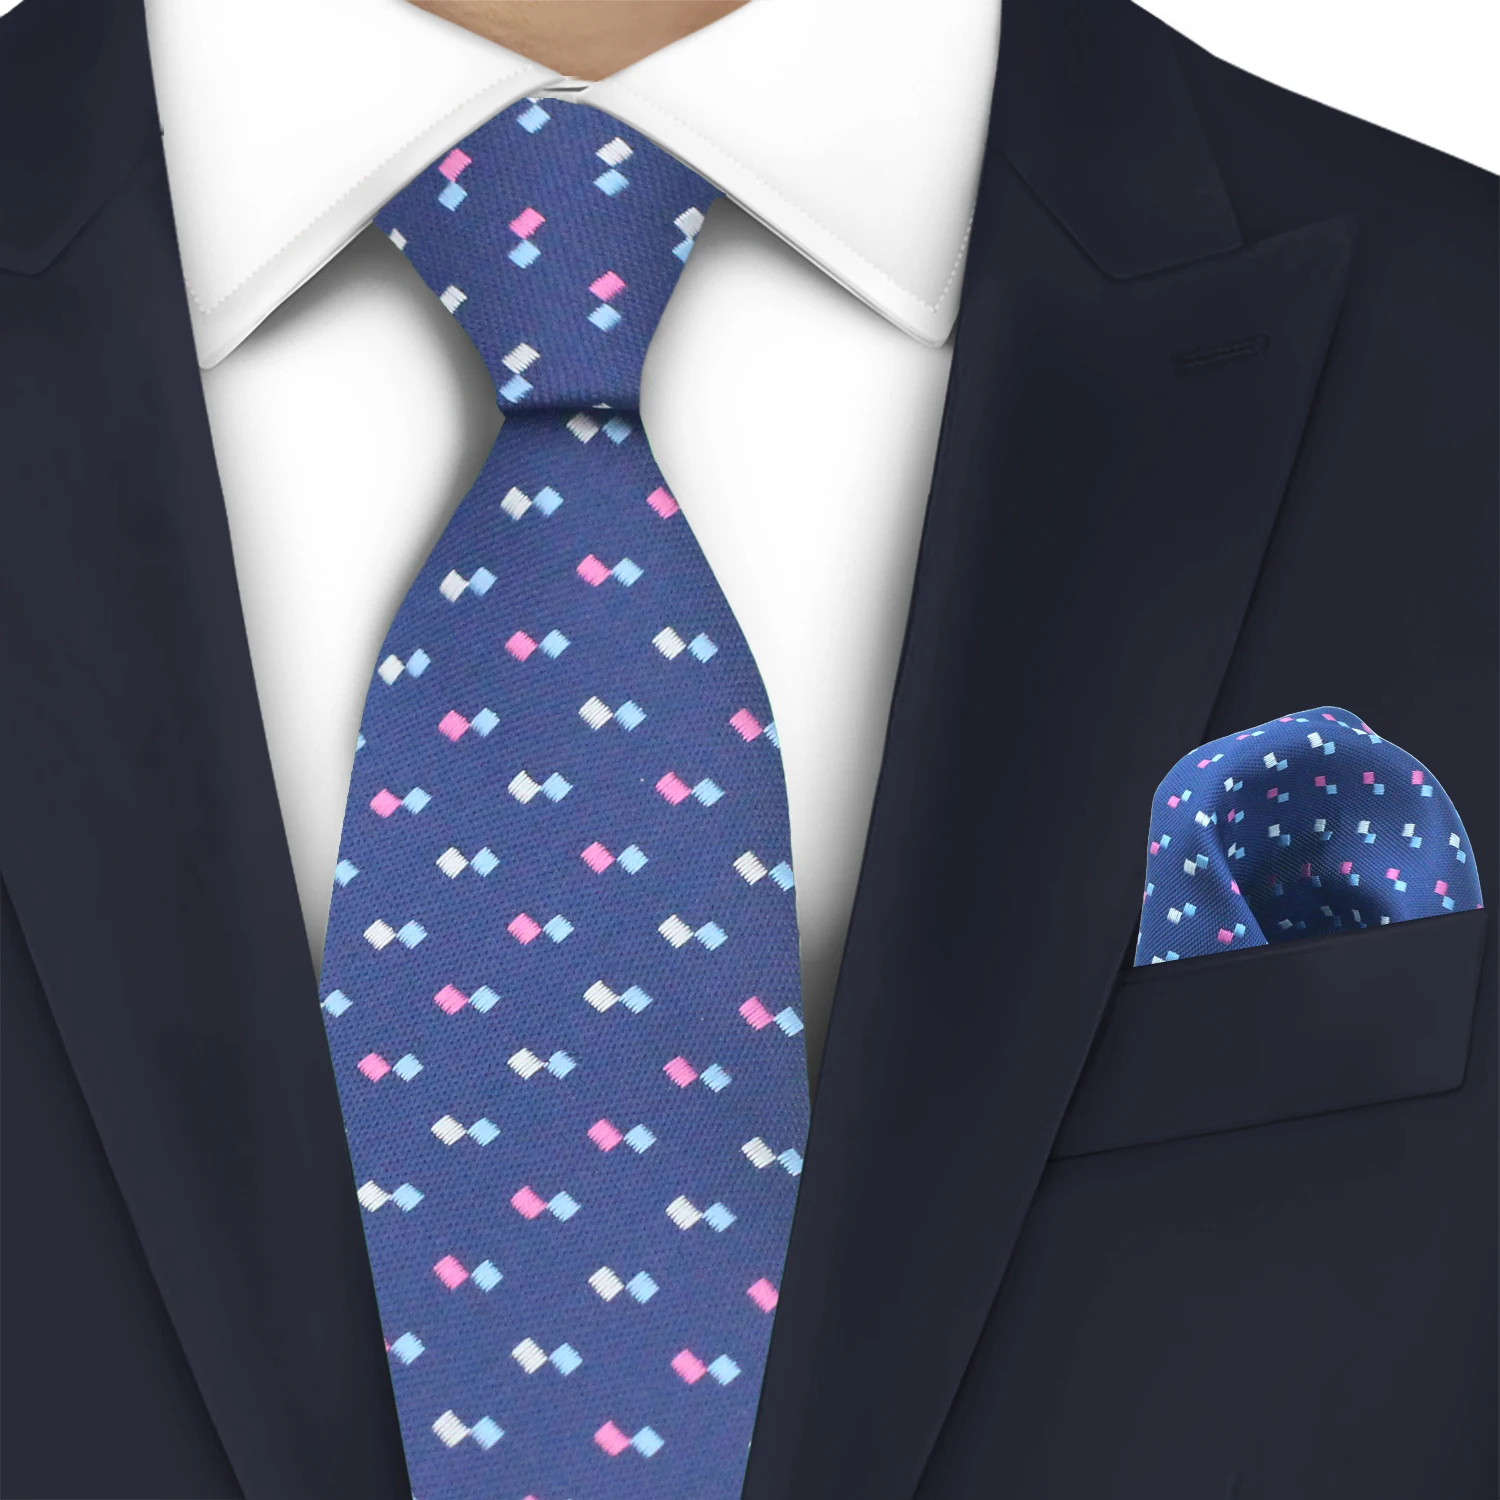 

LYL 5CM Luxury Business Tie Gift Set Fine Dark Blue Necktie Bundle With Handkerchief for Discerning Professionals Free Shipping